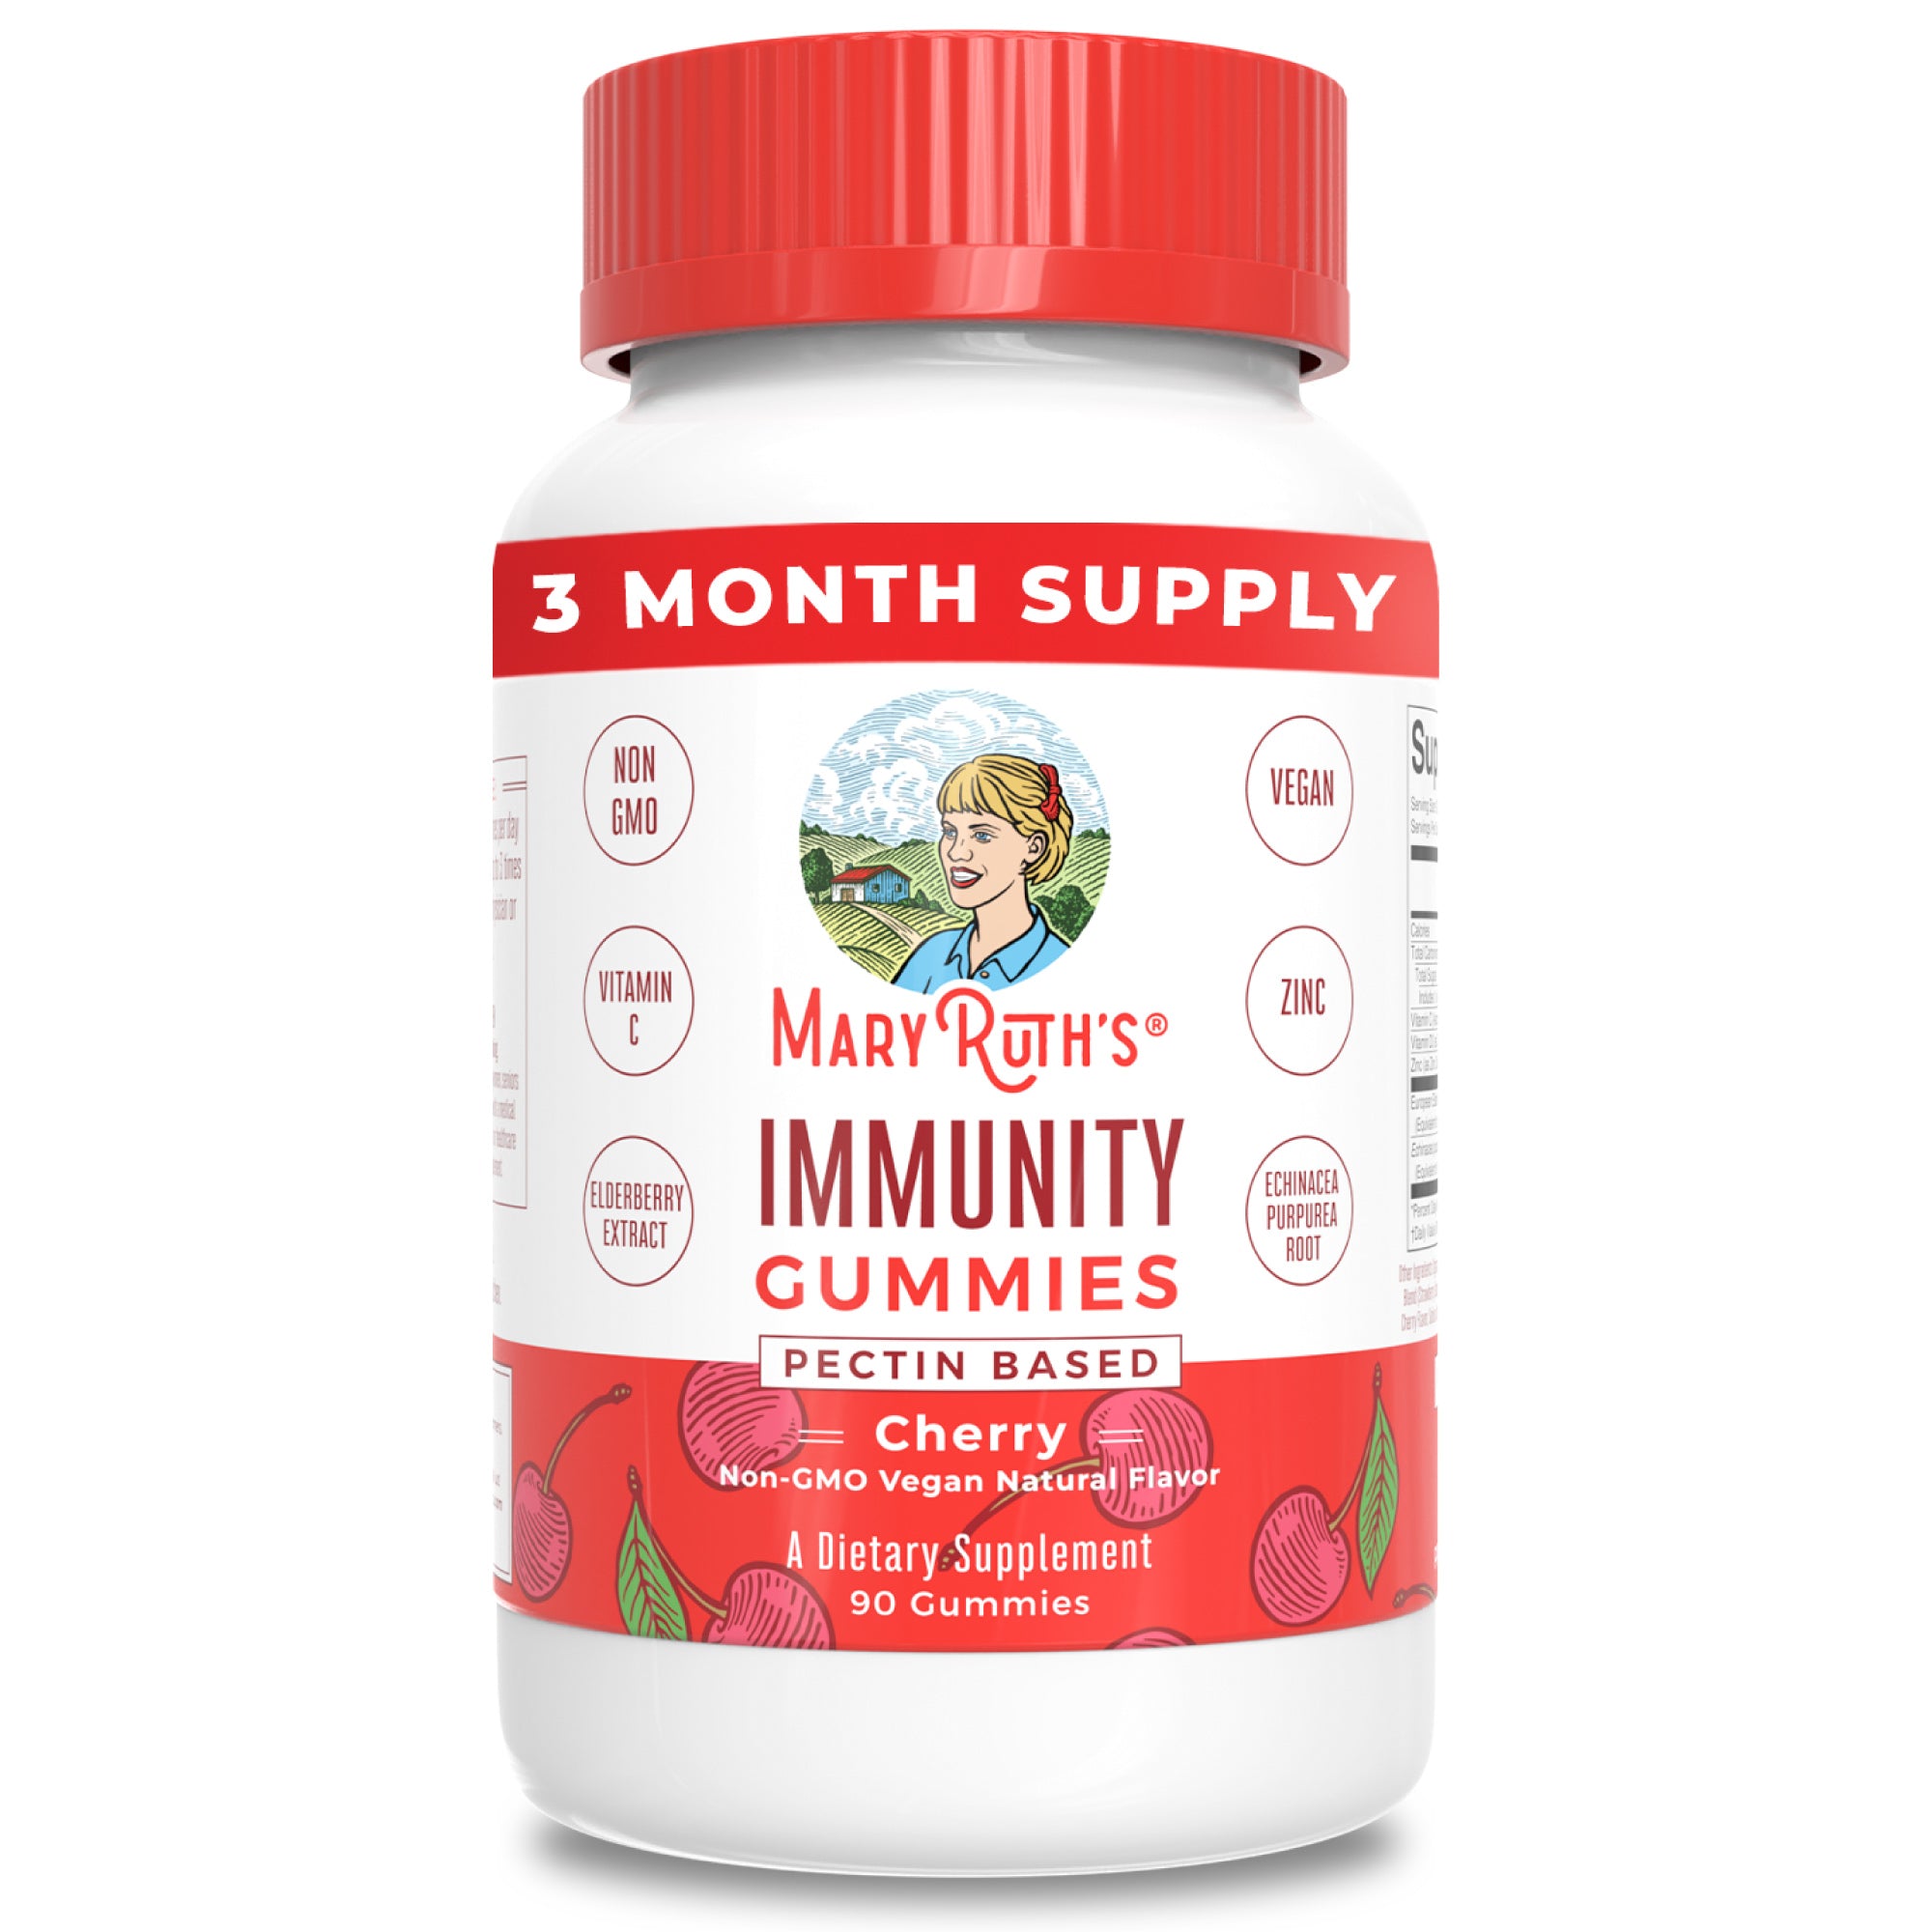 MaryRuth Immunity Gummies Cherry Flavor Product Image